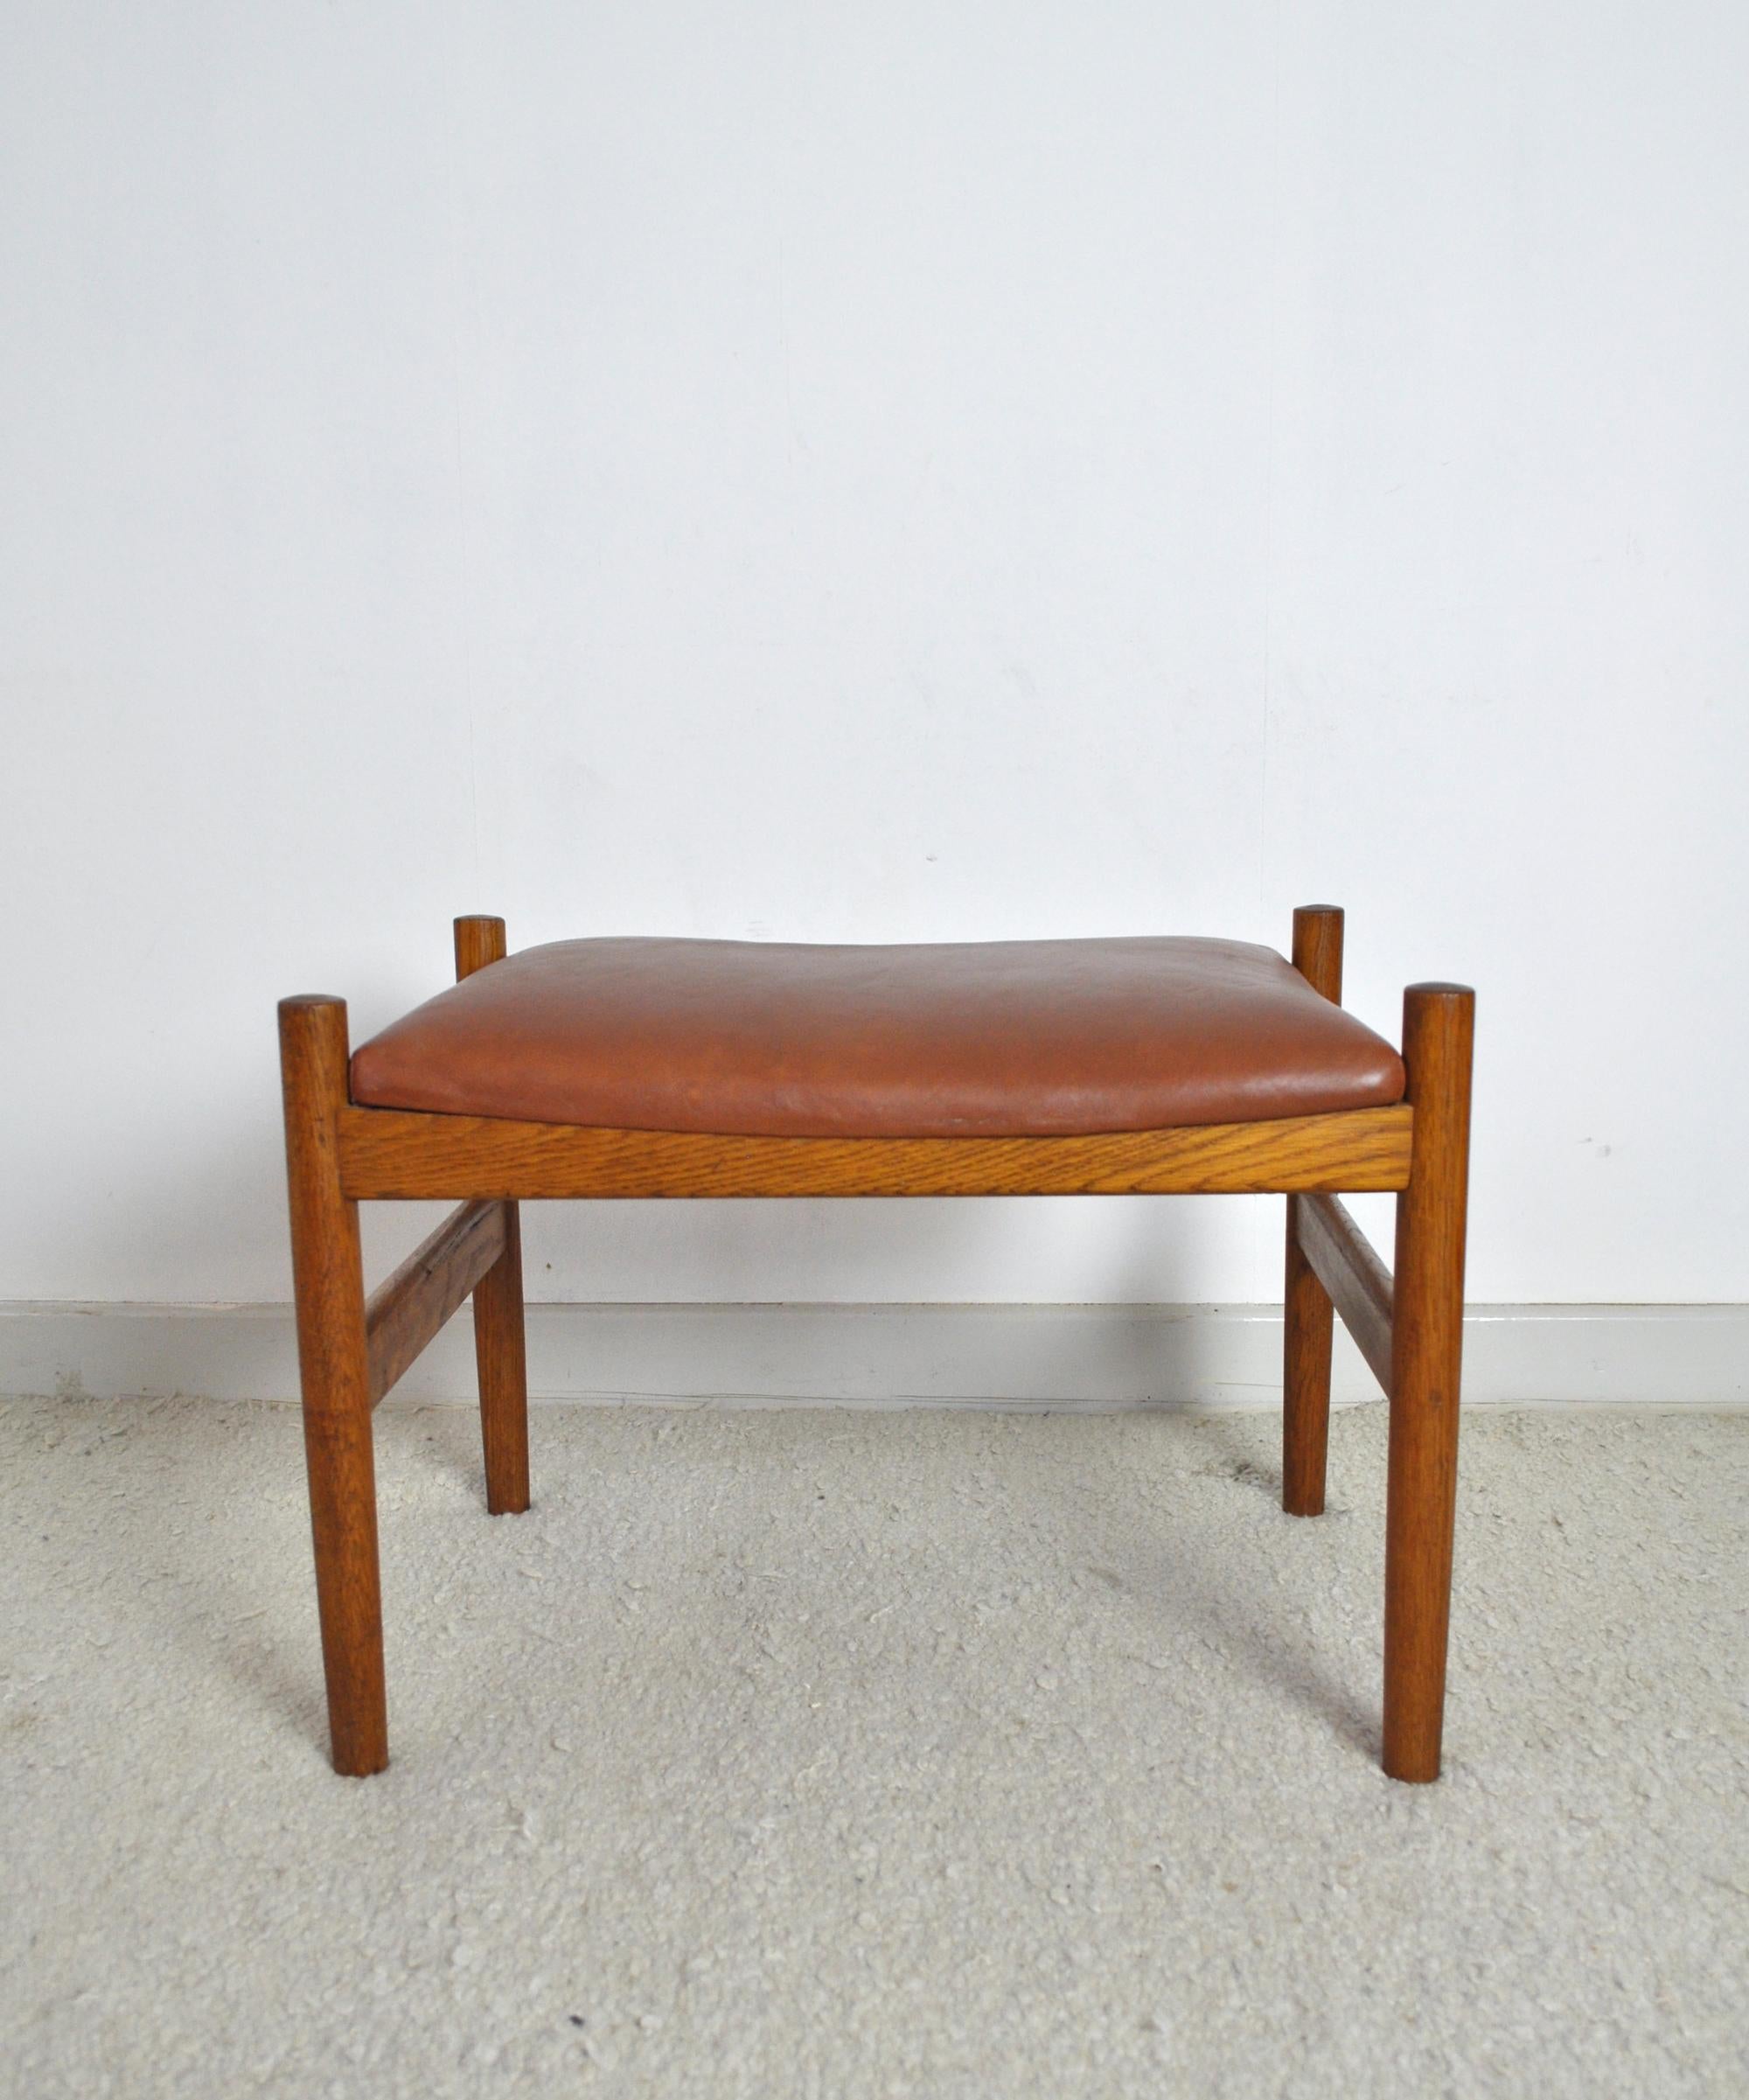 Danish midcentury ottoman or stool, solid oak frame and gently refurbished brown original leather cushion. Produced by Hugo Frandsen, Spøttrup 1960s.